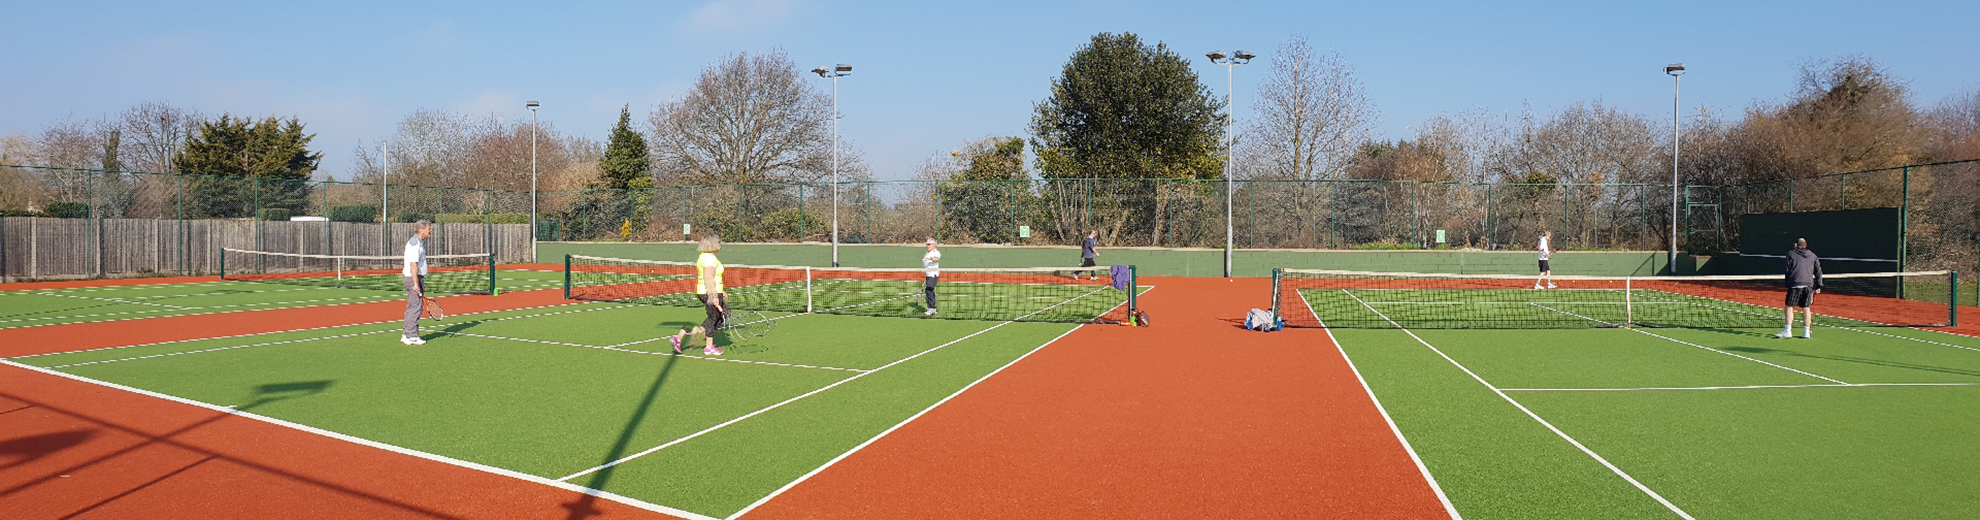 Croxley Tennis Club - Apply for Membership